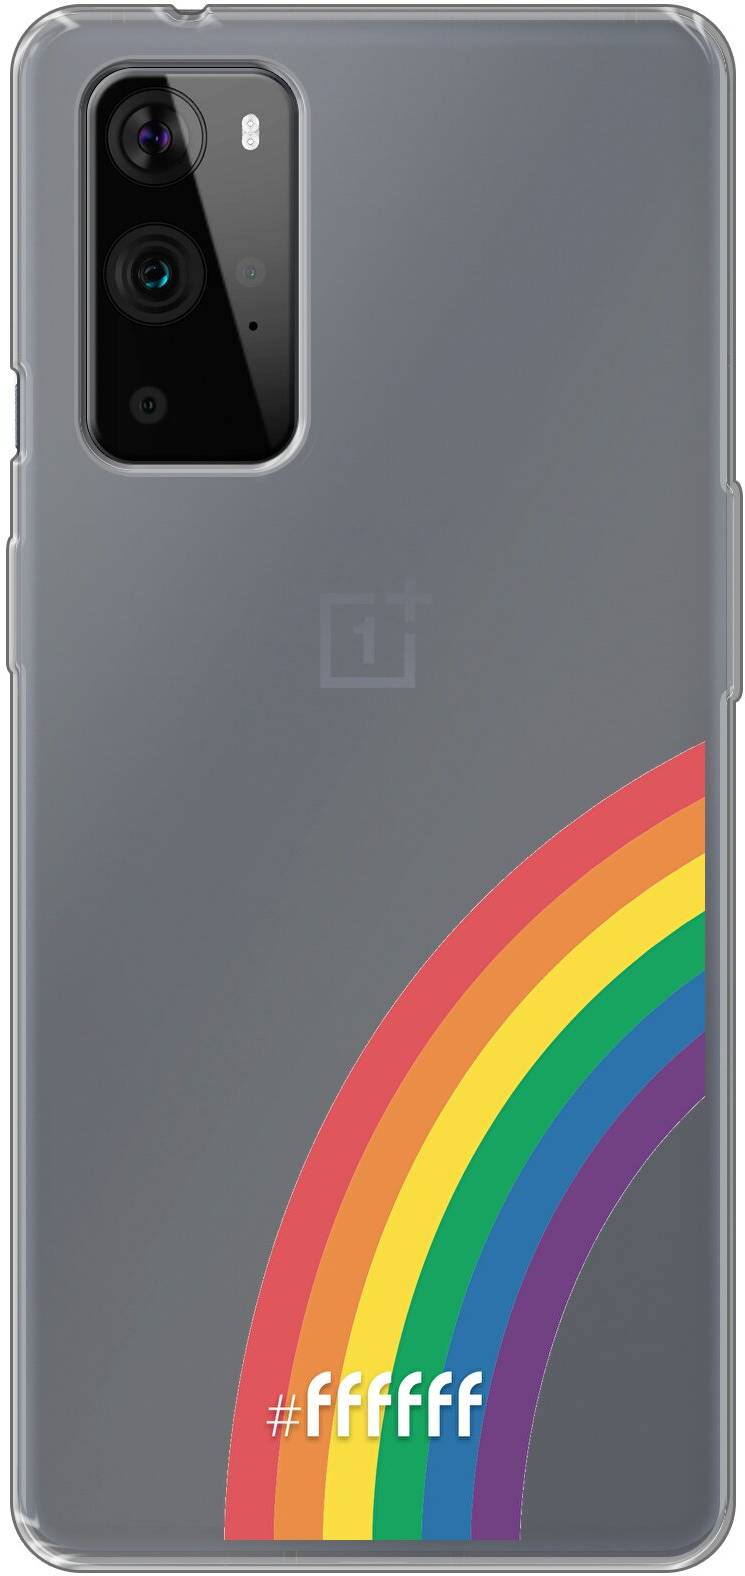 #LGBT - Rainbow 9 Pro